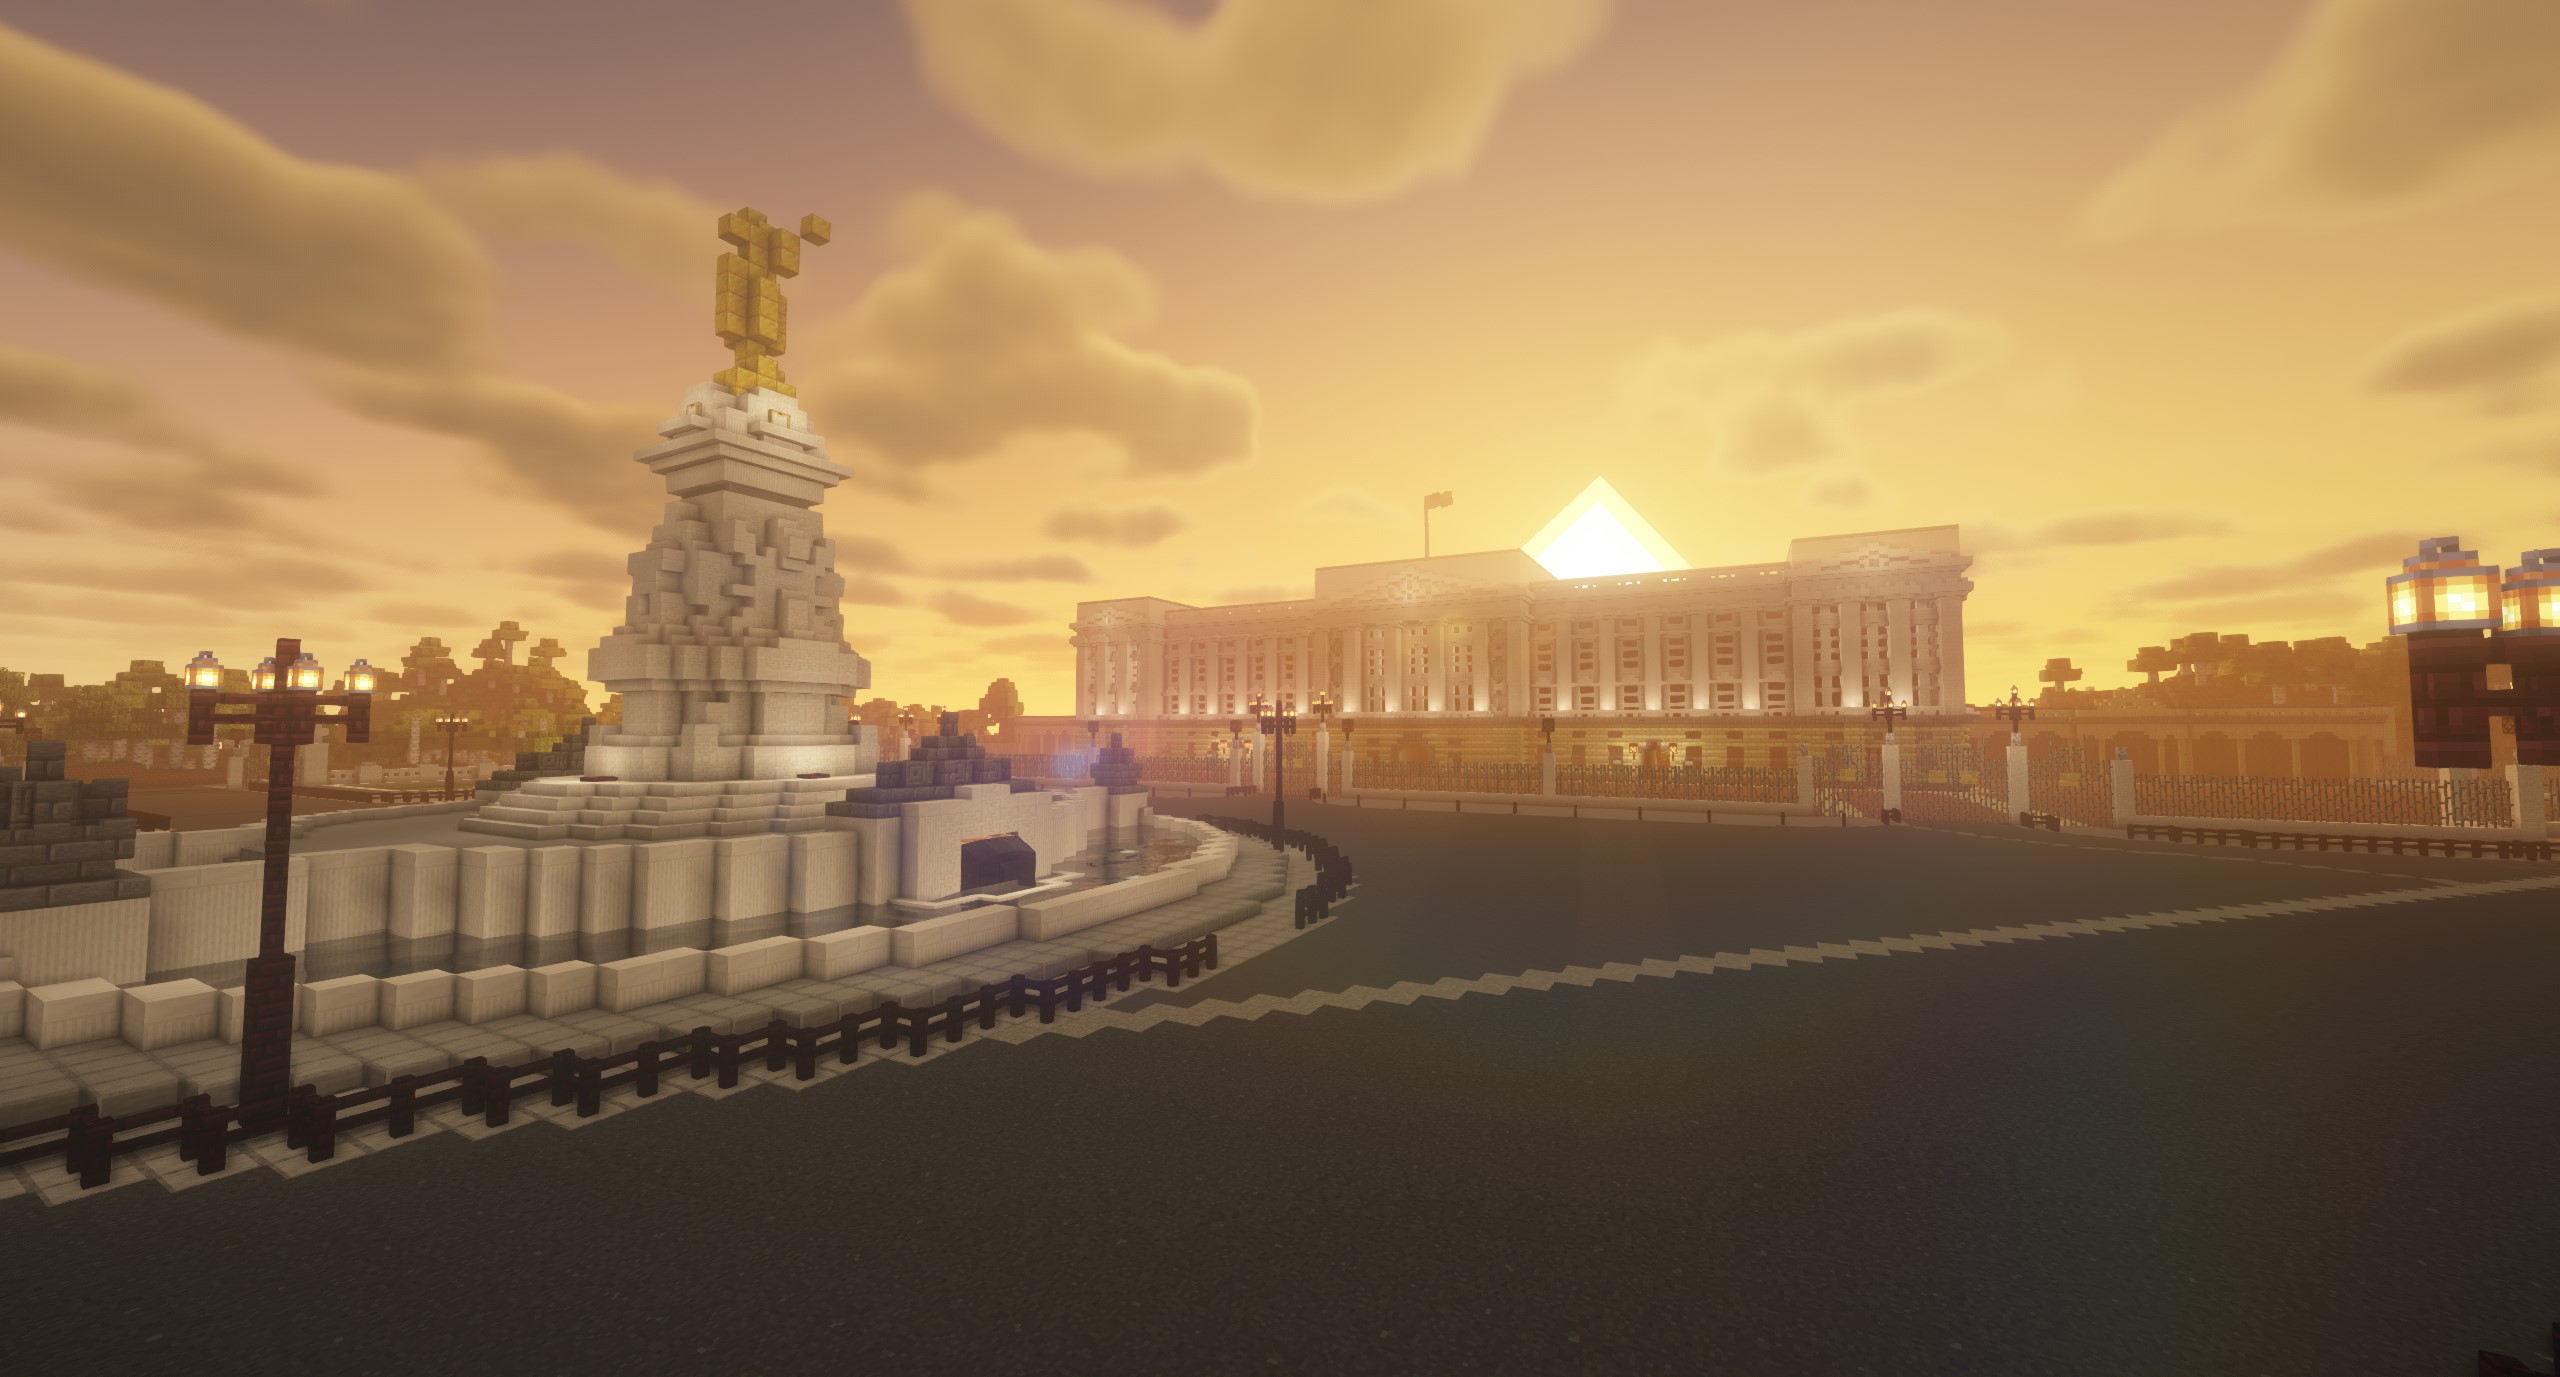 A Minecraft creation designed to look like Buckingham Palace